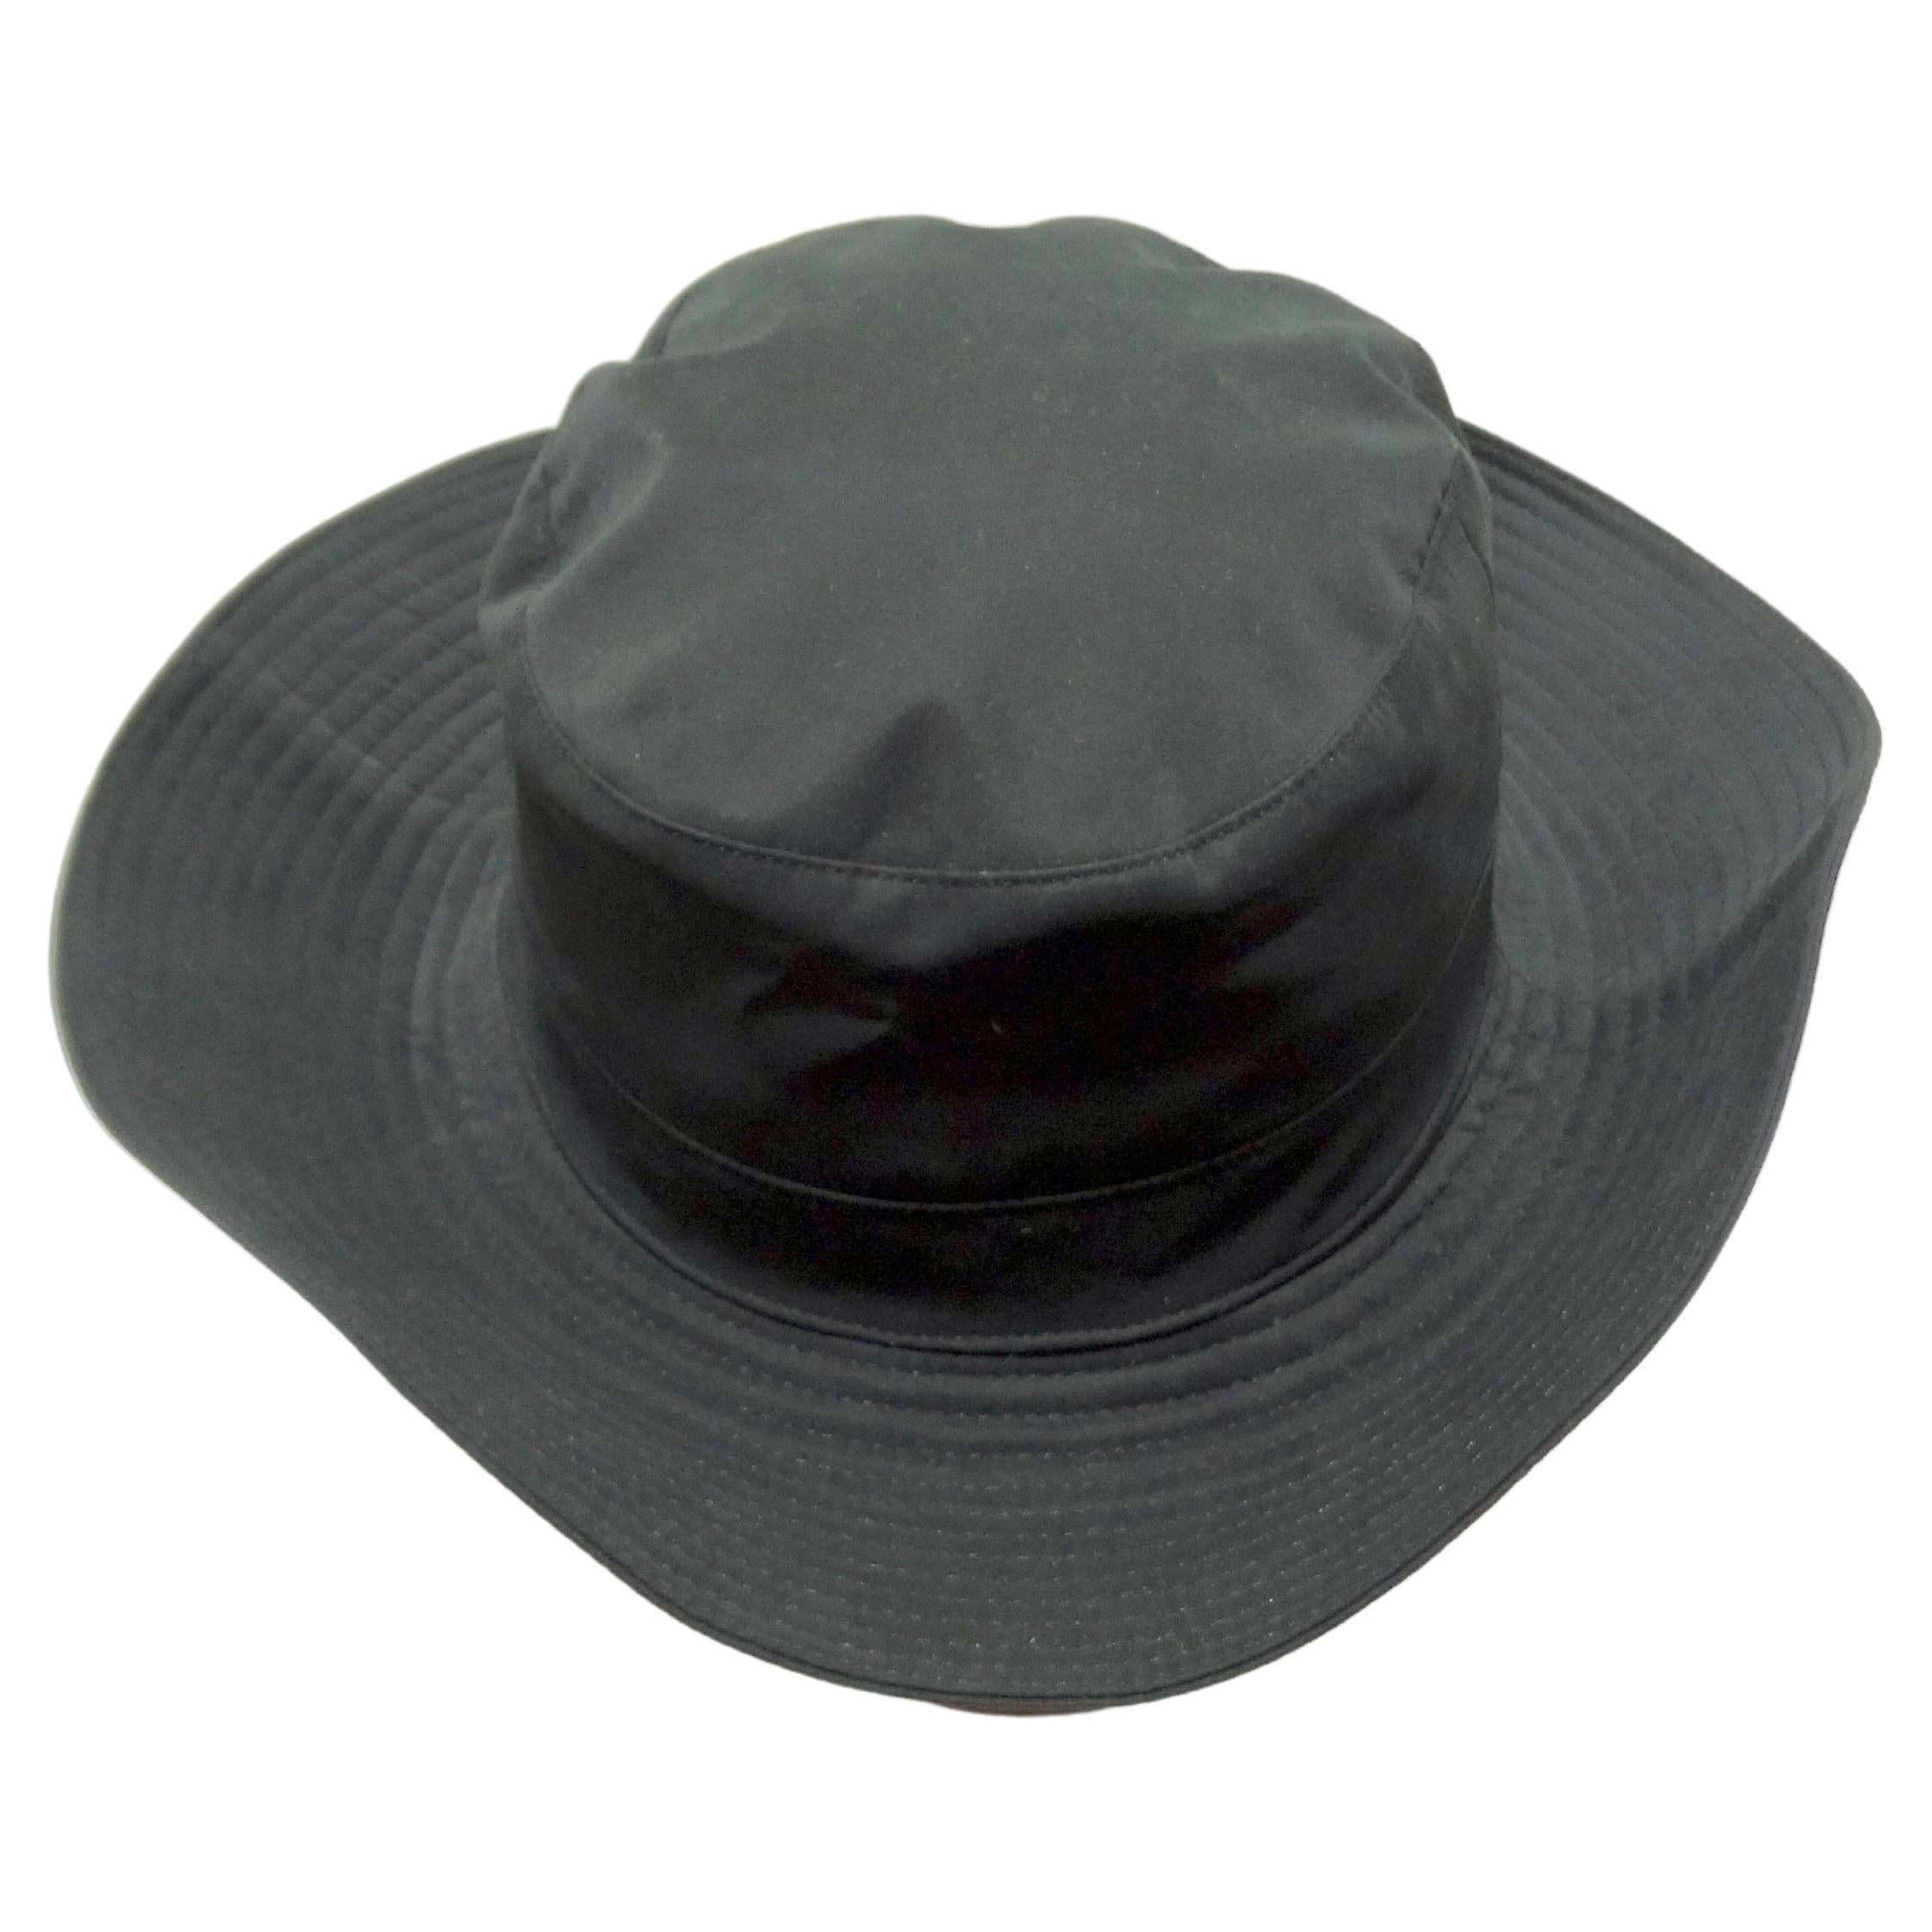 Black Hermes Bucket Hat